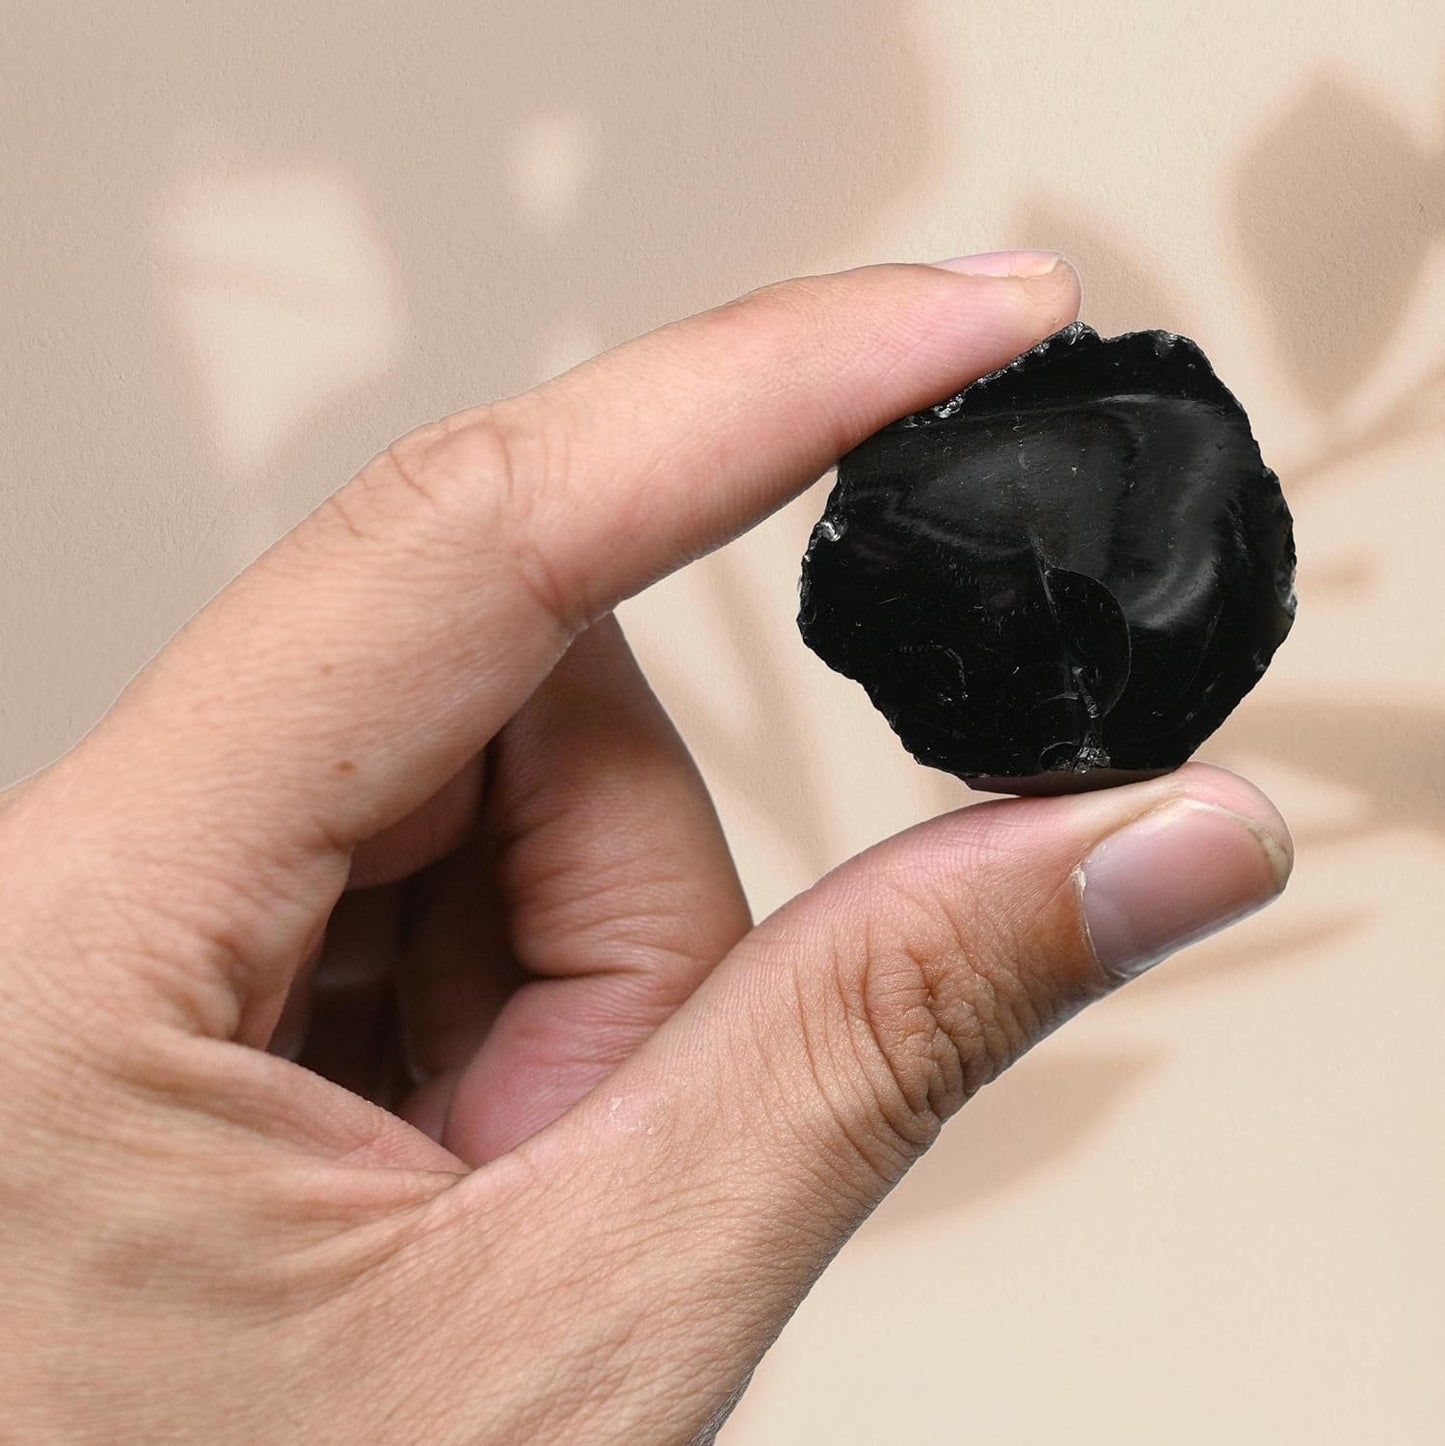 Nature Black Obsidian